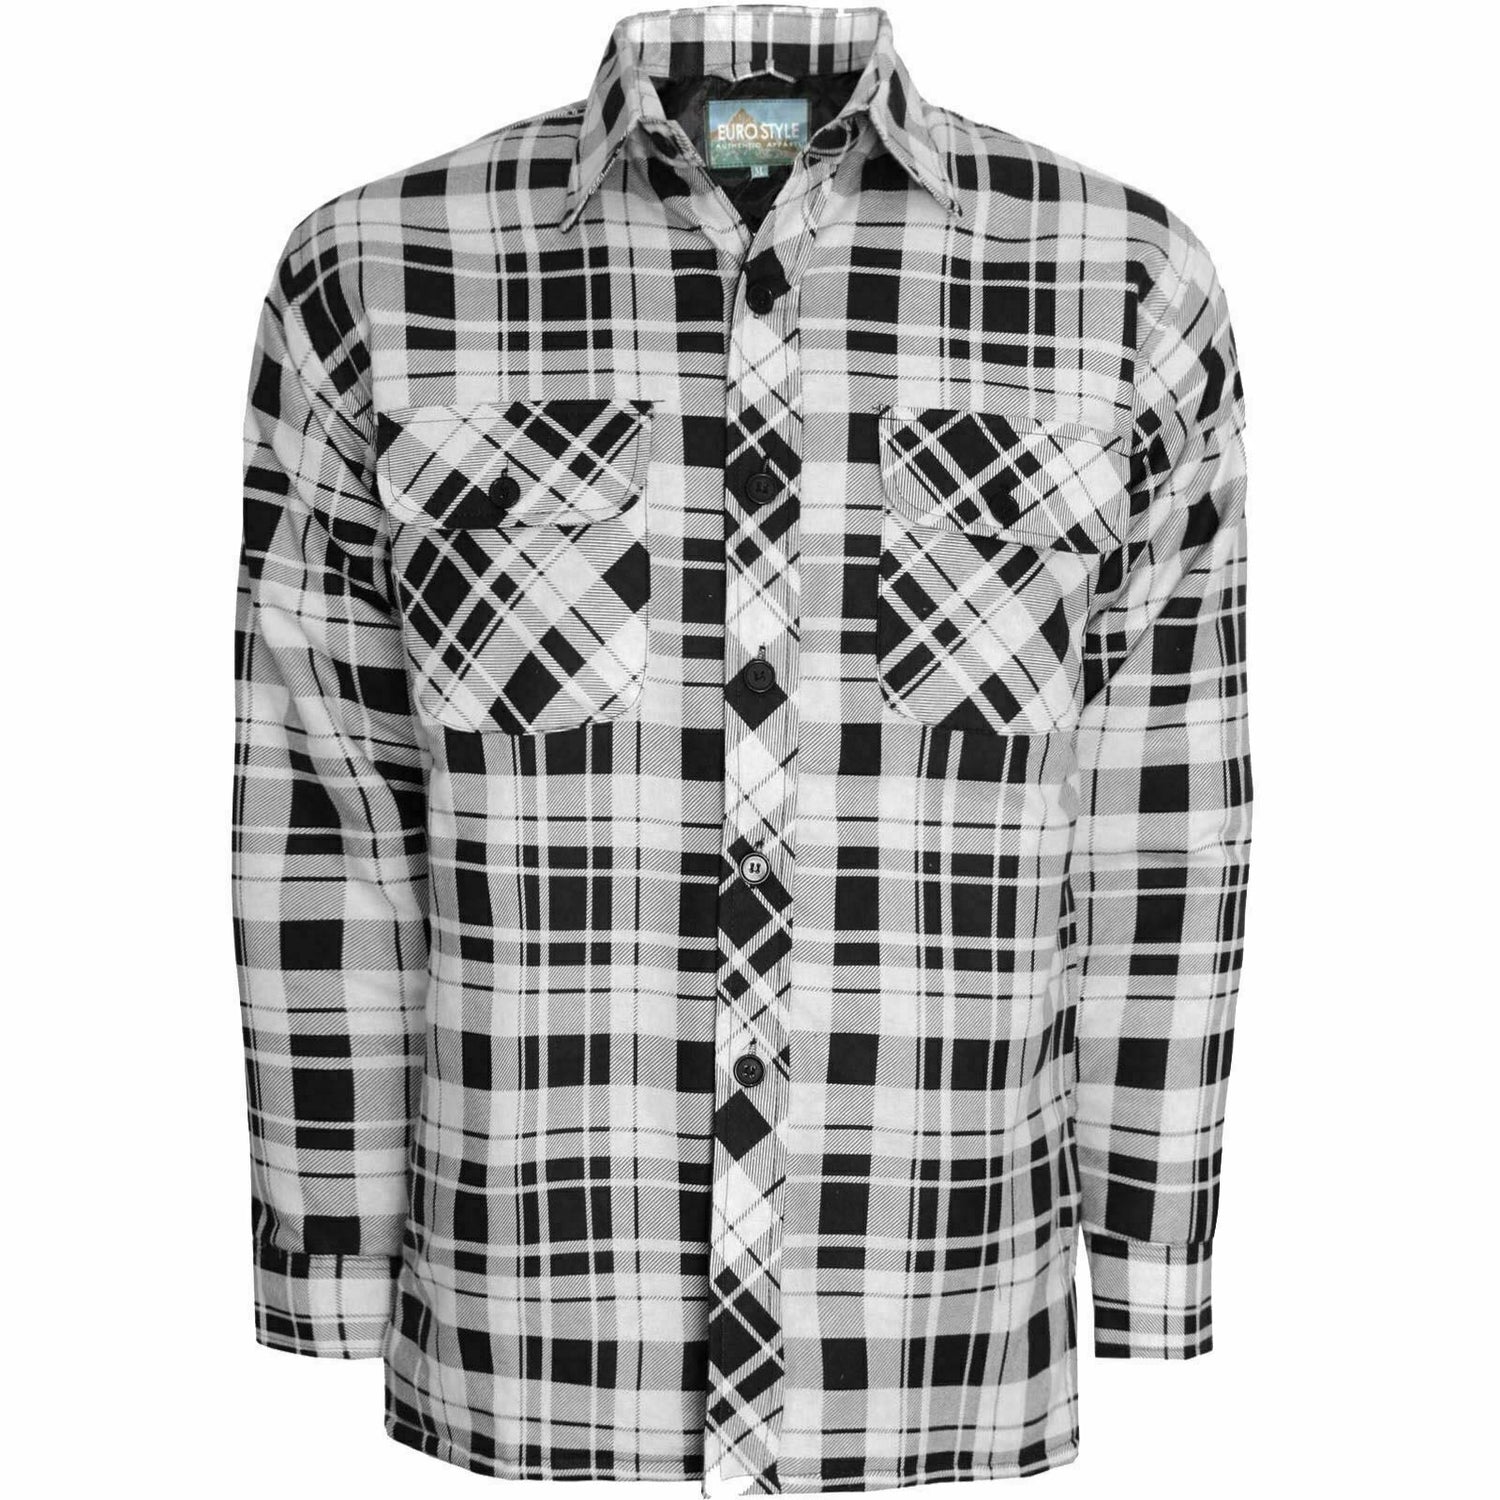 Men's Lumberjack Flannel Shirt In Black and White Check.